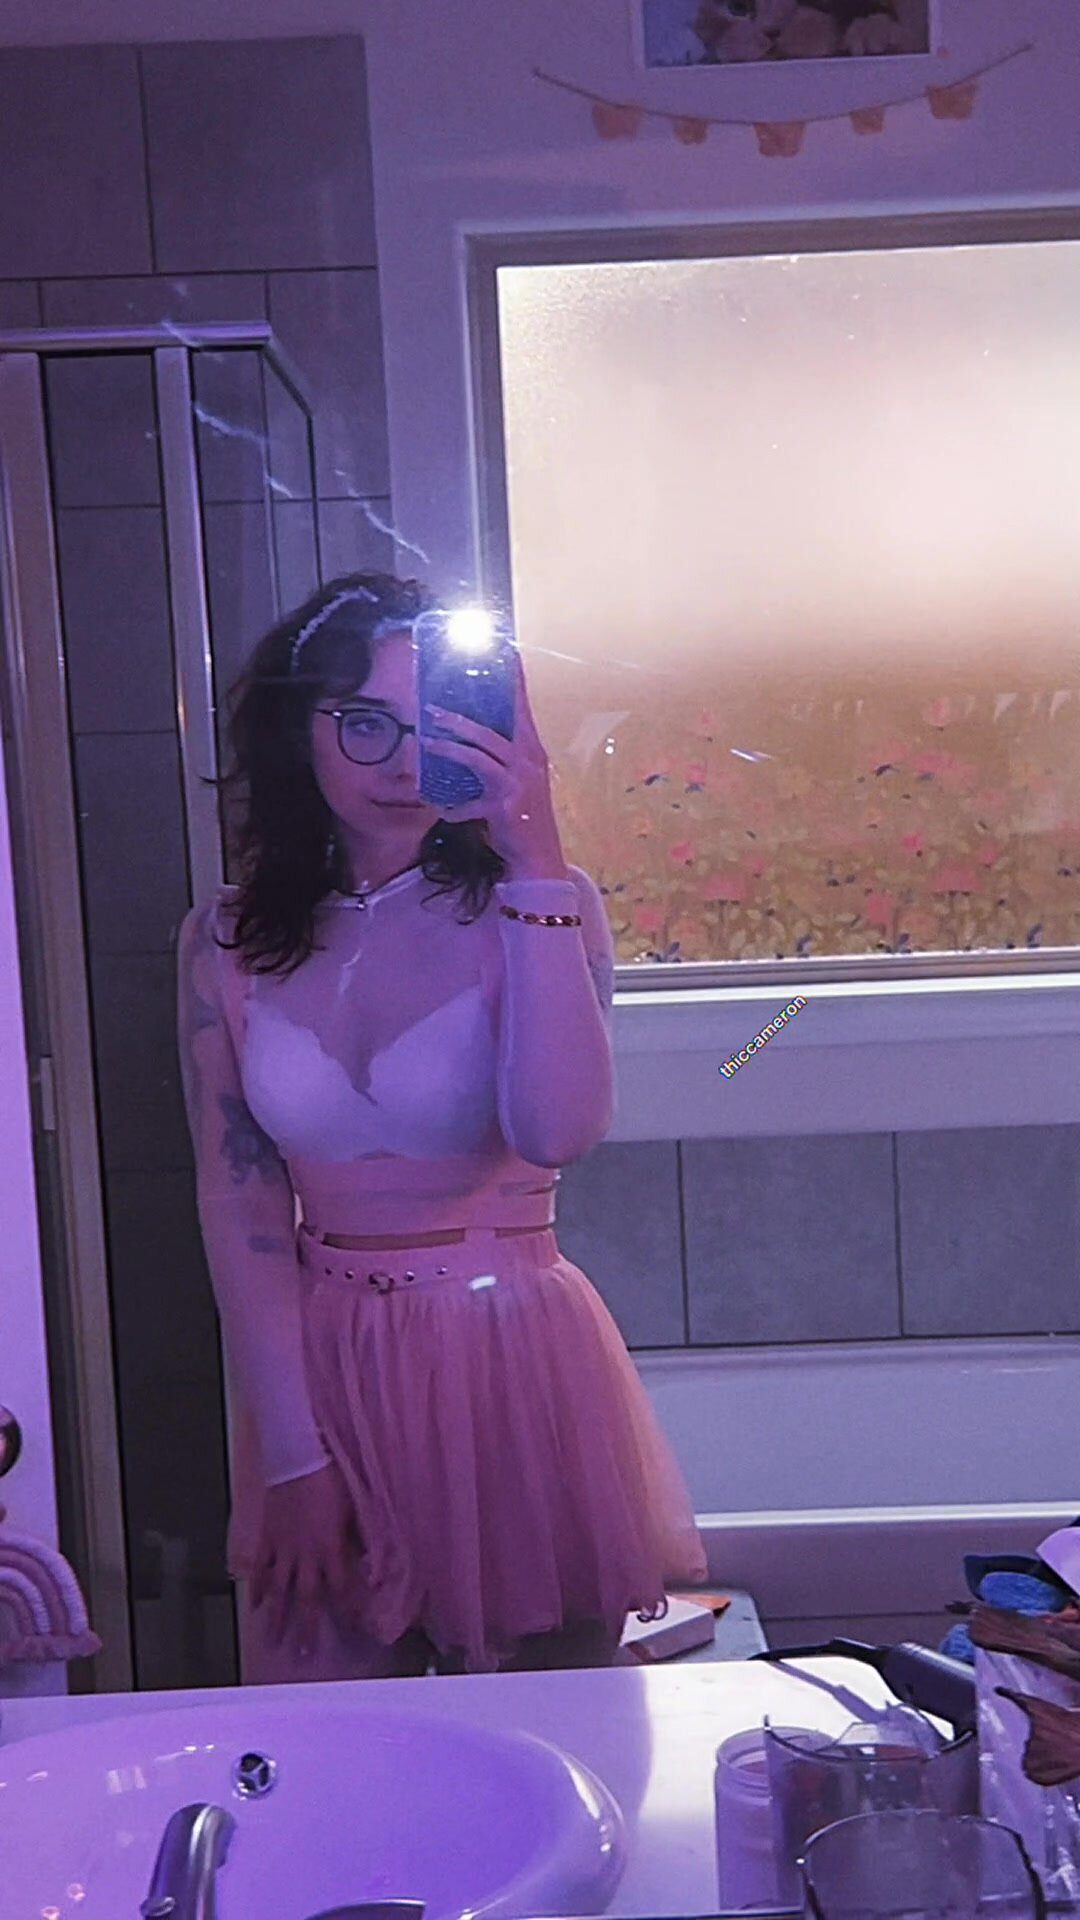 feeling pretty in my pink skirt